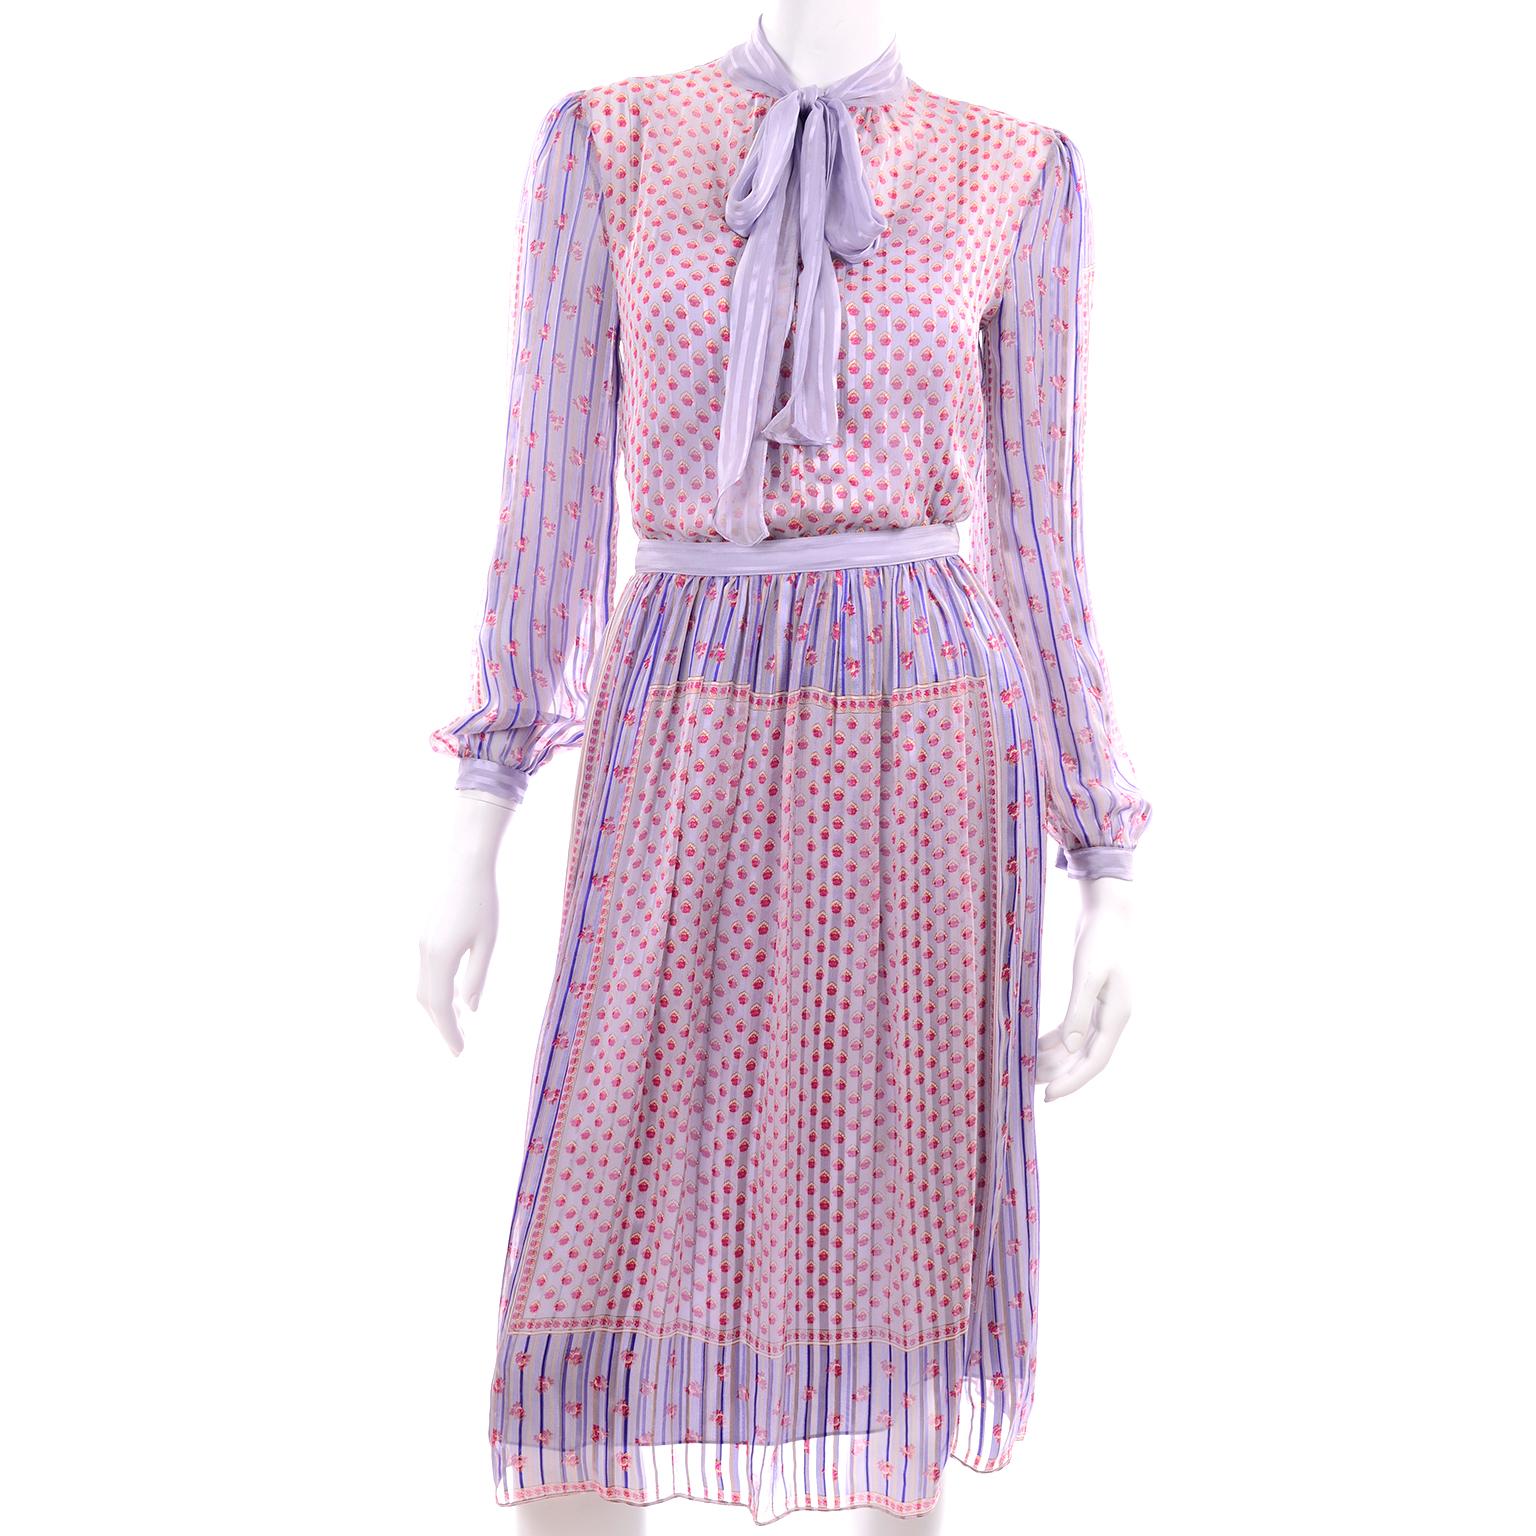 Designer Silk Chiffon 2 Pc Dress in Purple Yellow Pink Floral Print Pattern Mix 2